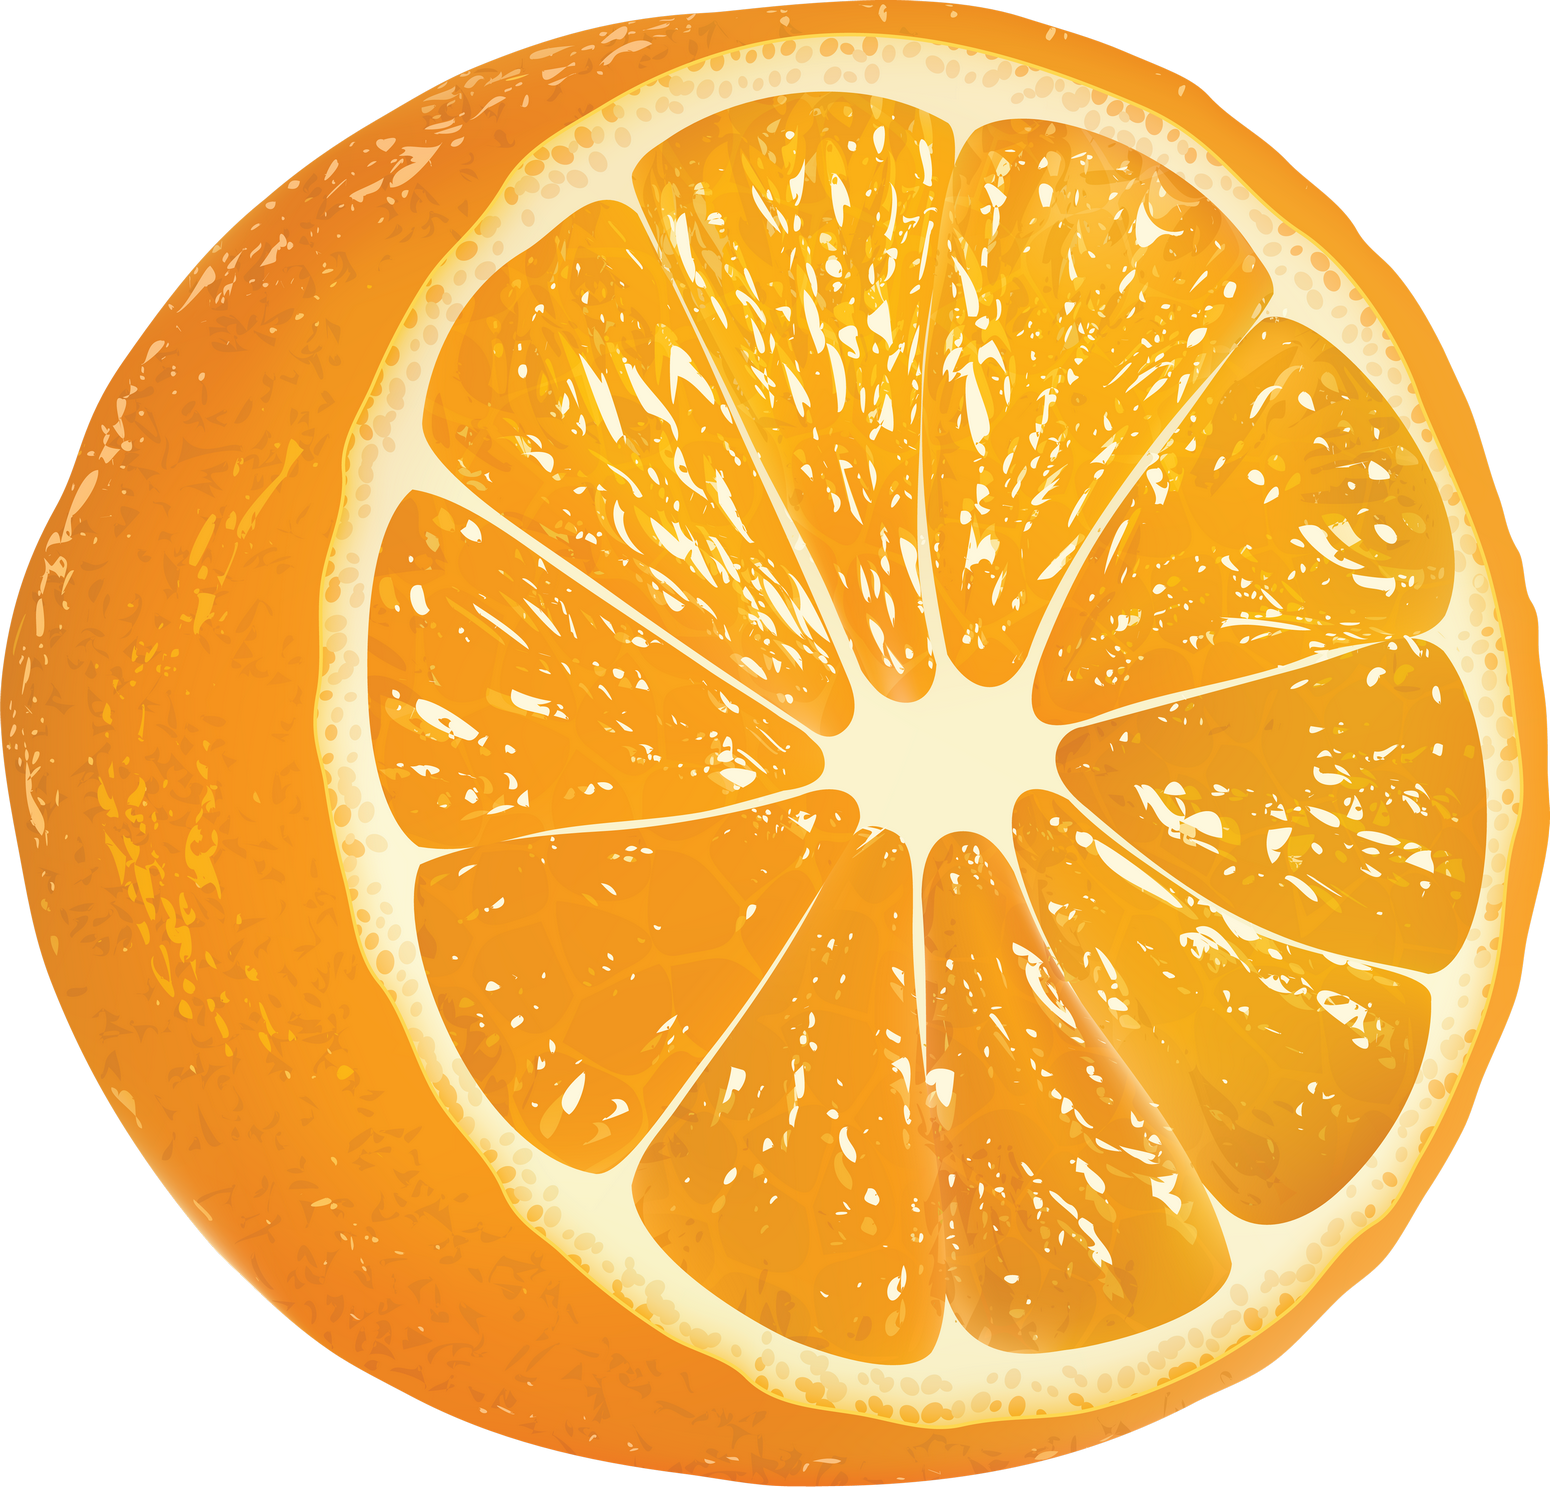 Orange Oranges Png Image Purepng Free Transparent Cc0 Png Image